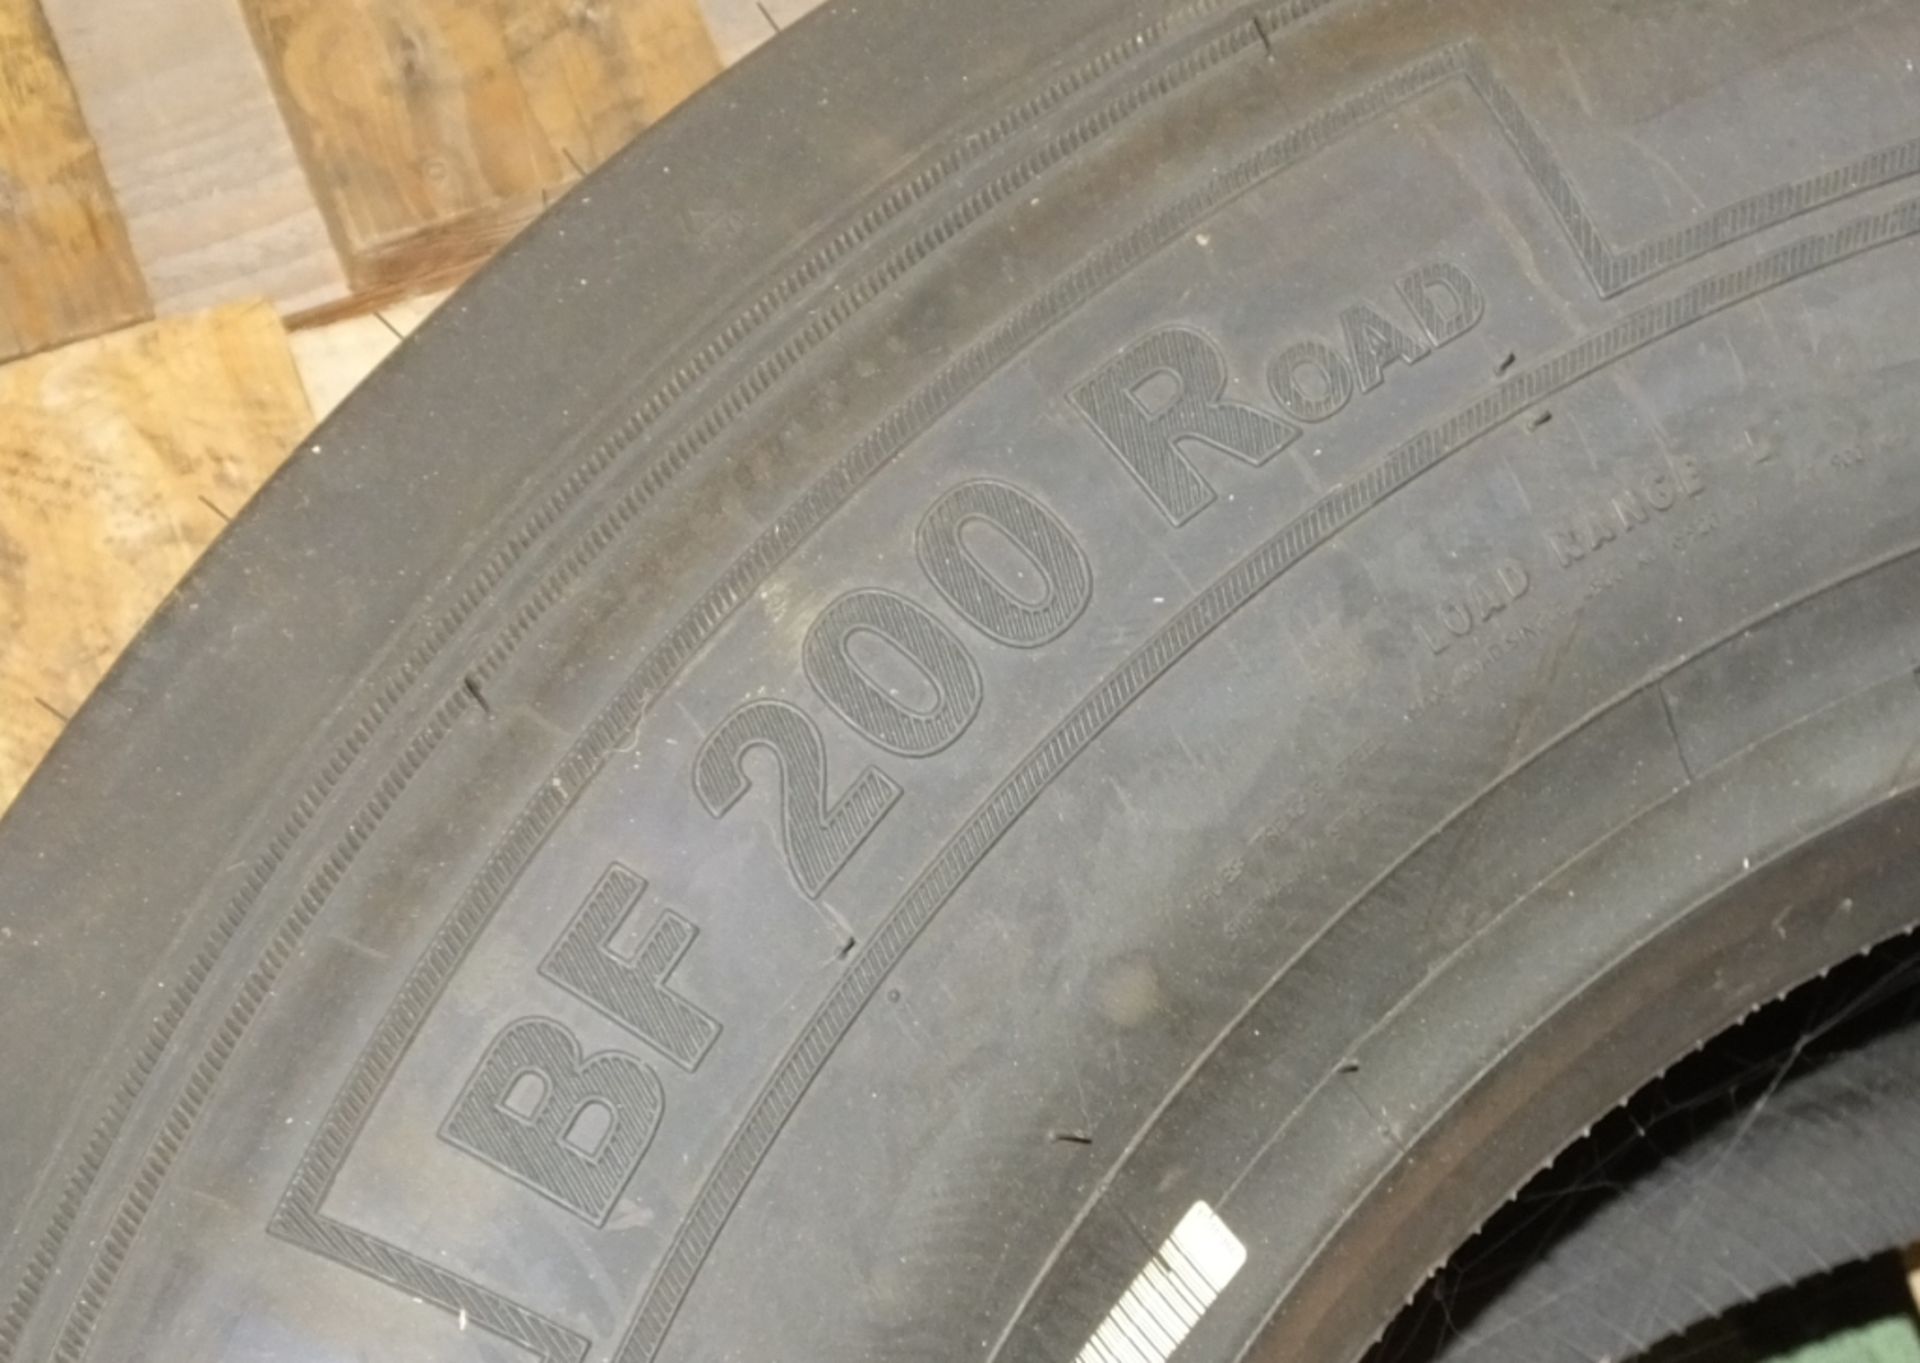 Barum BF 200 Road tire - 385/55 R 22.5 (new & unused) - Image 2 of 5